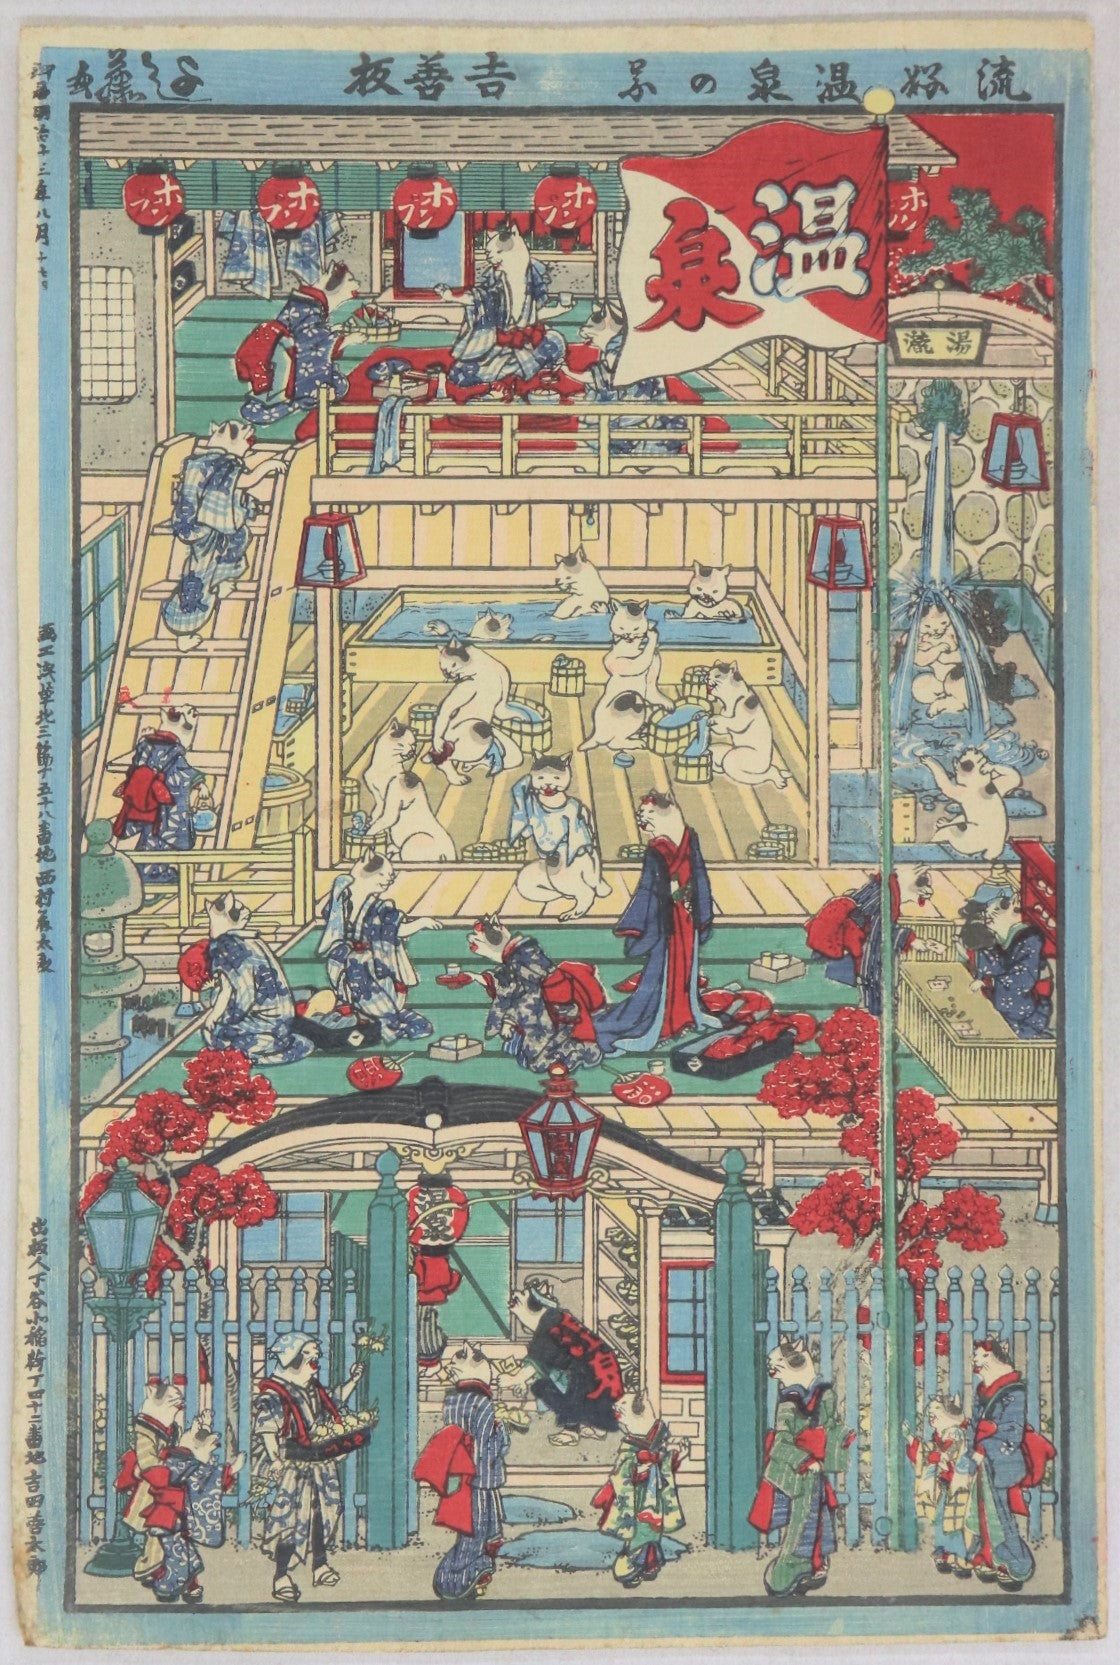 Popular Hotspring Spa of Cats /Onsen Populaire de Chats by Yoshifuji (1880)